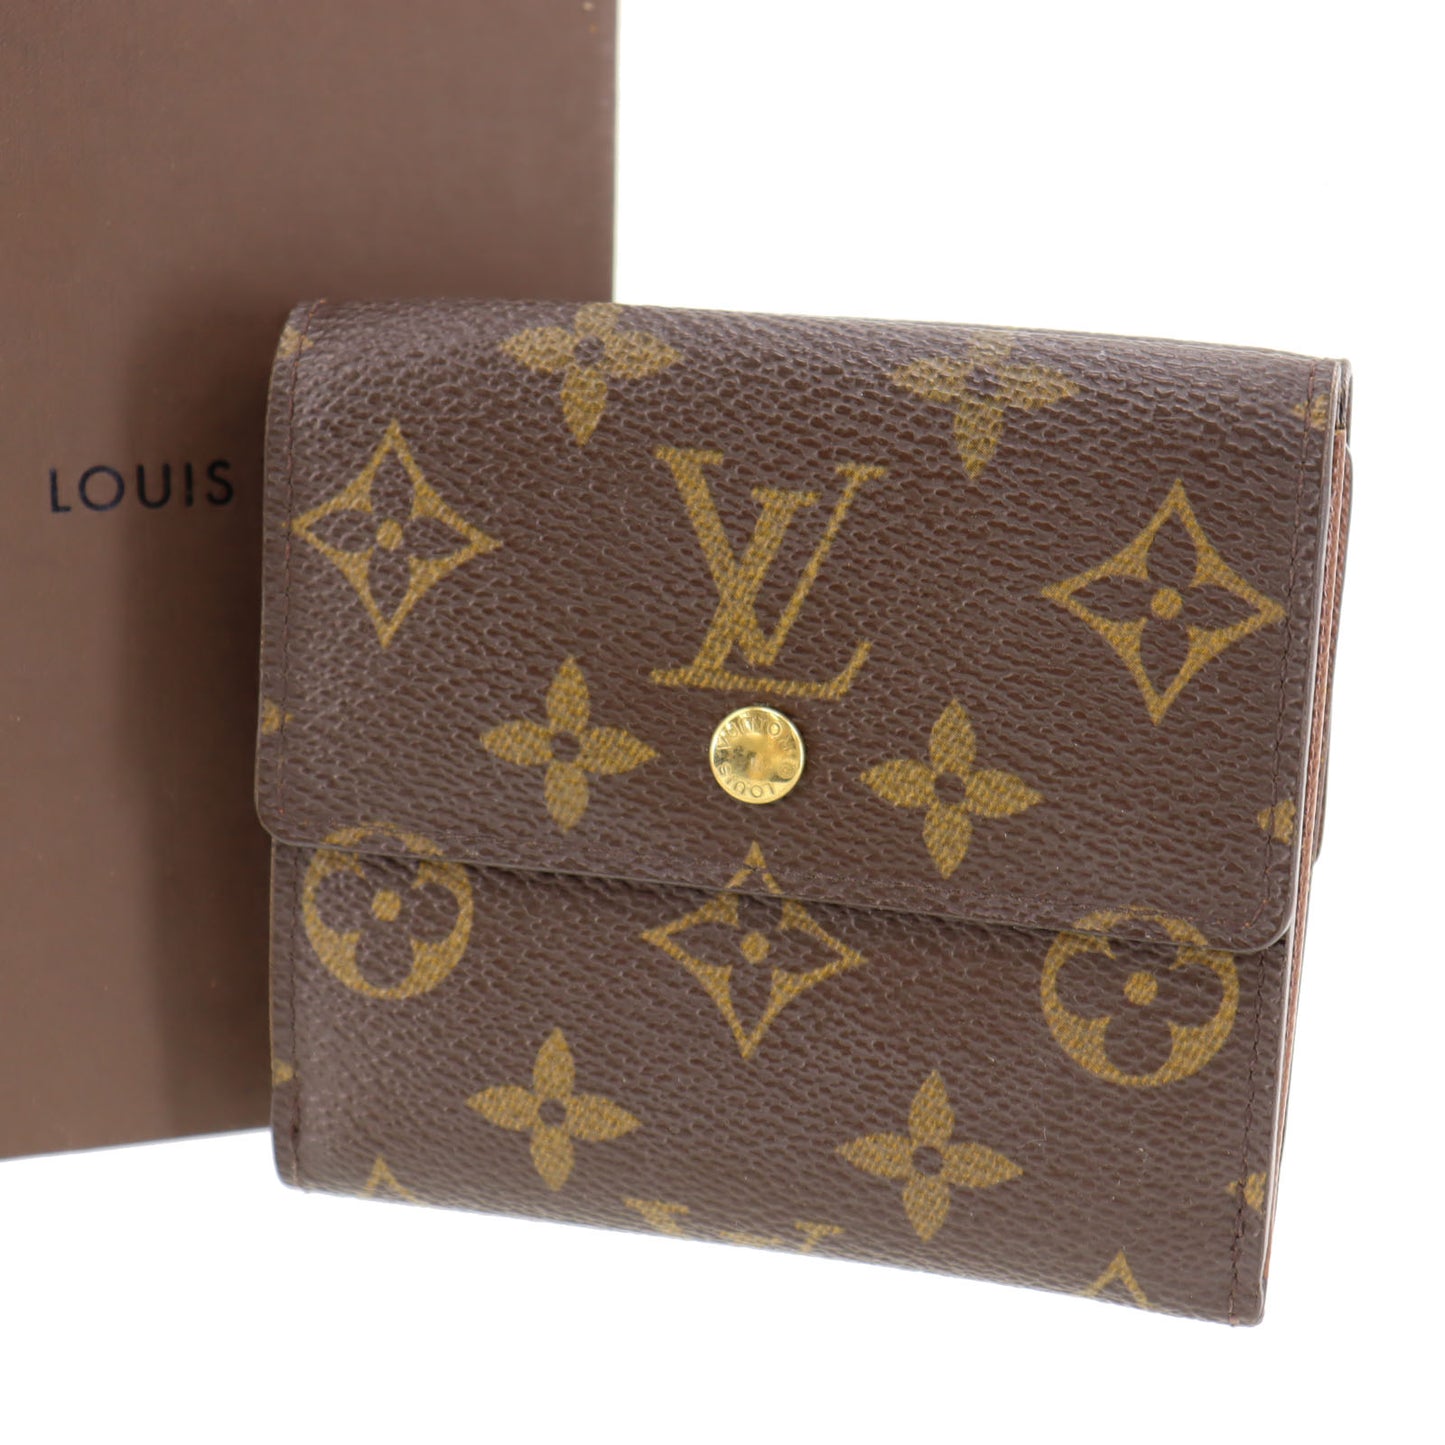 Louis Vuitton Elise Purse in Monogram - SOLD